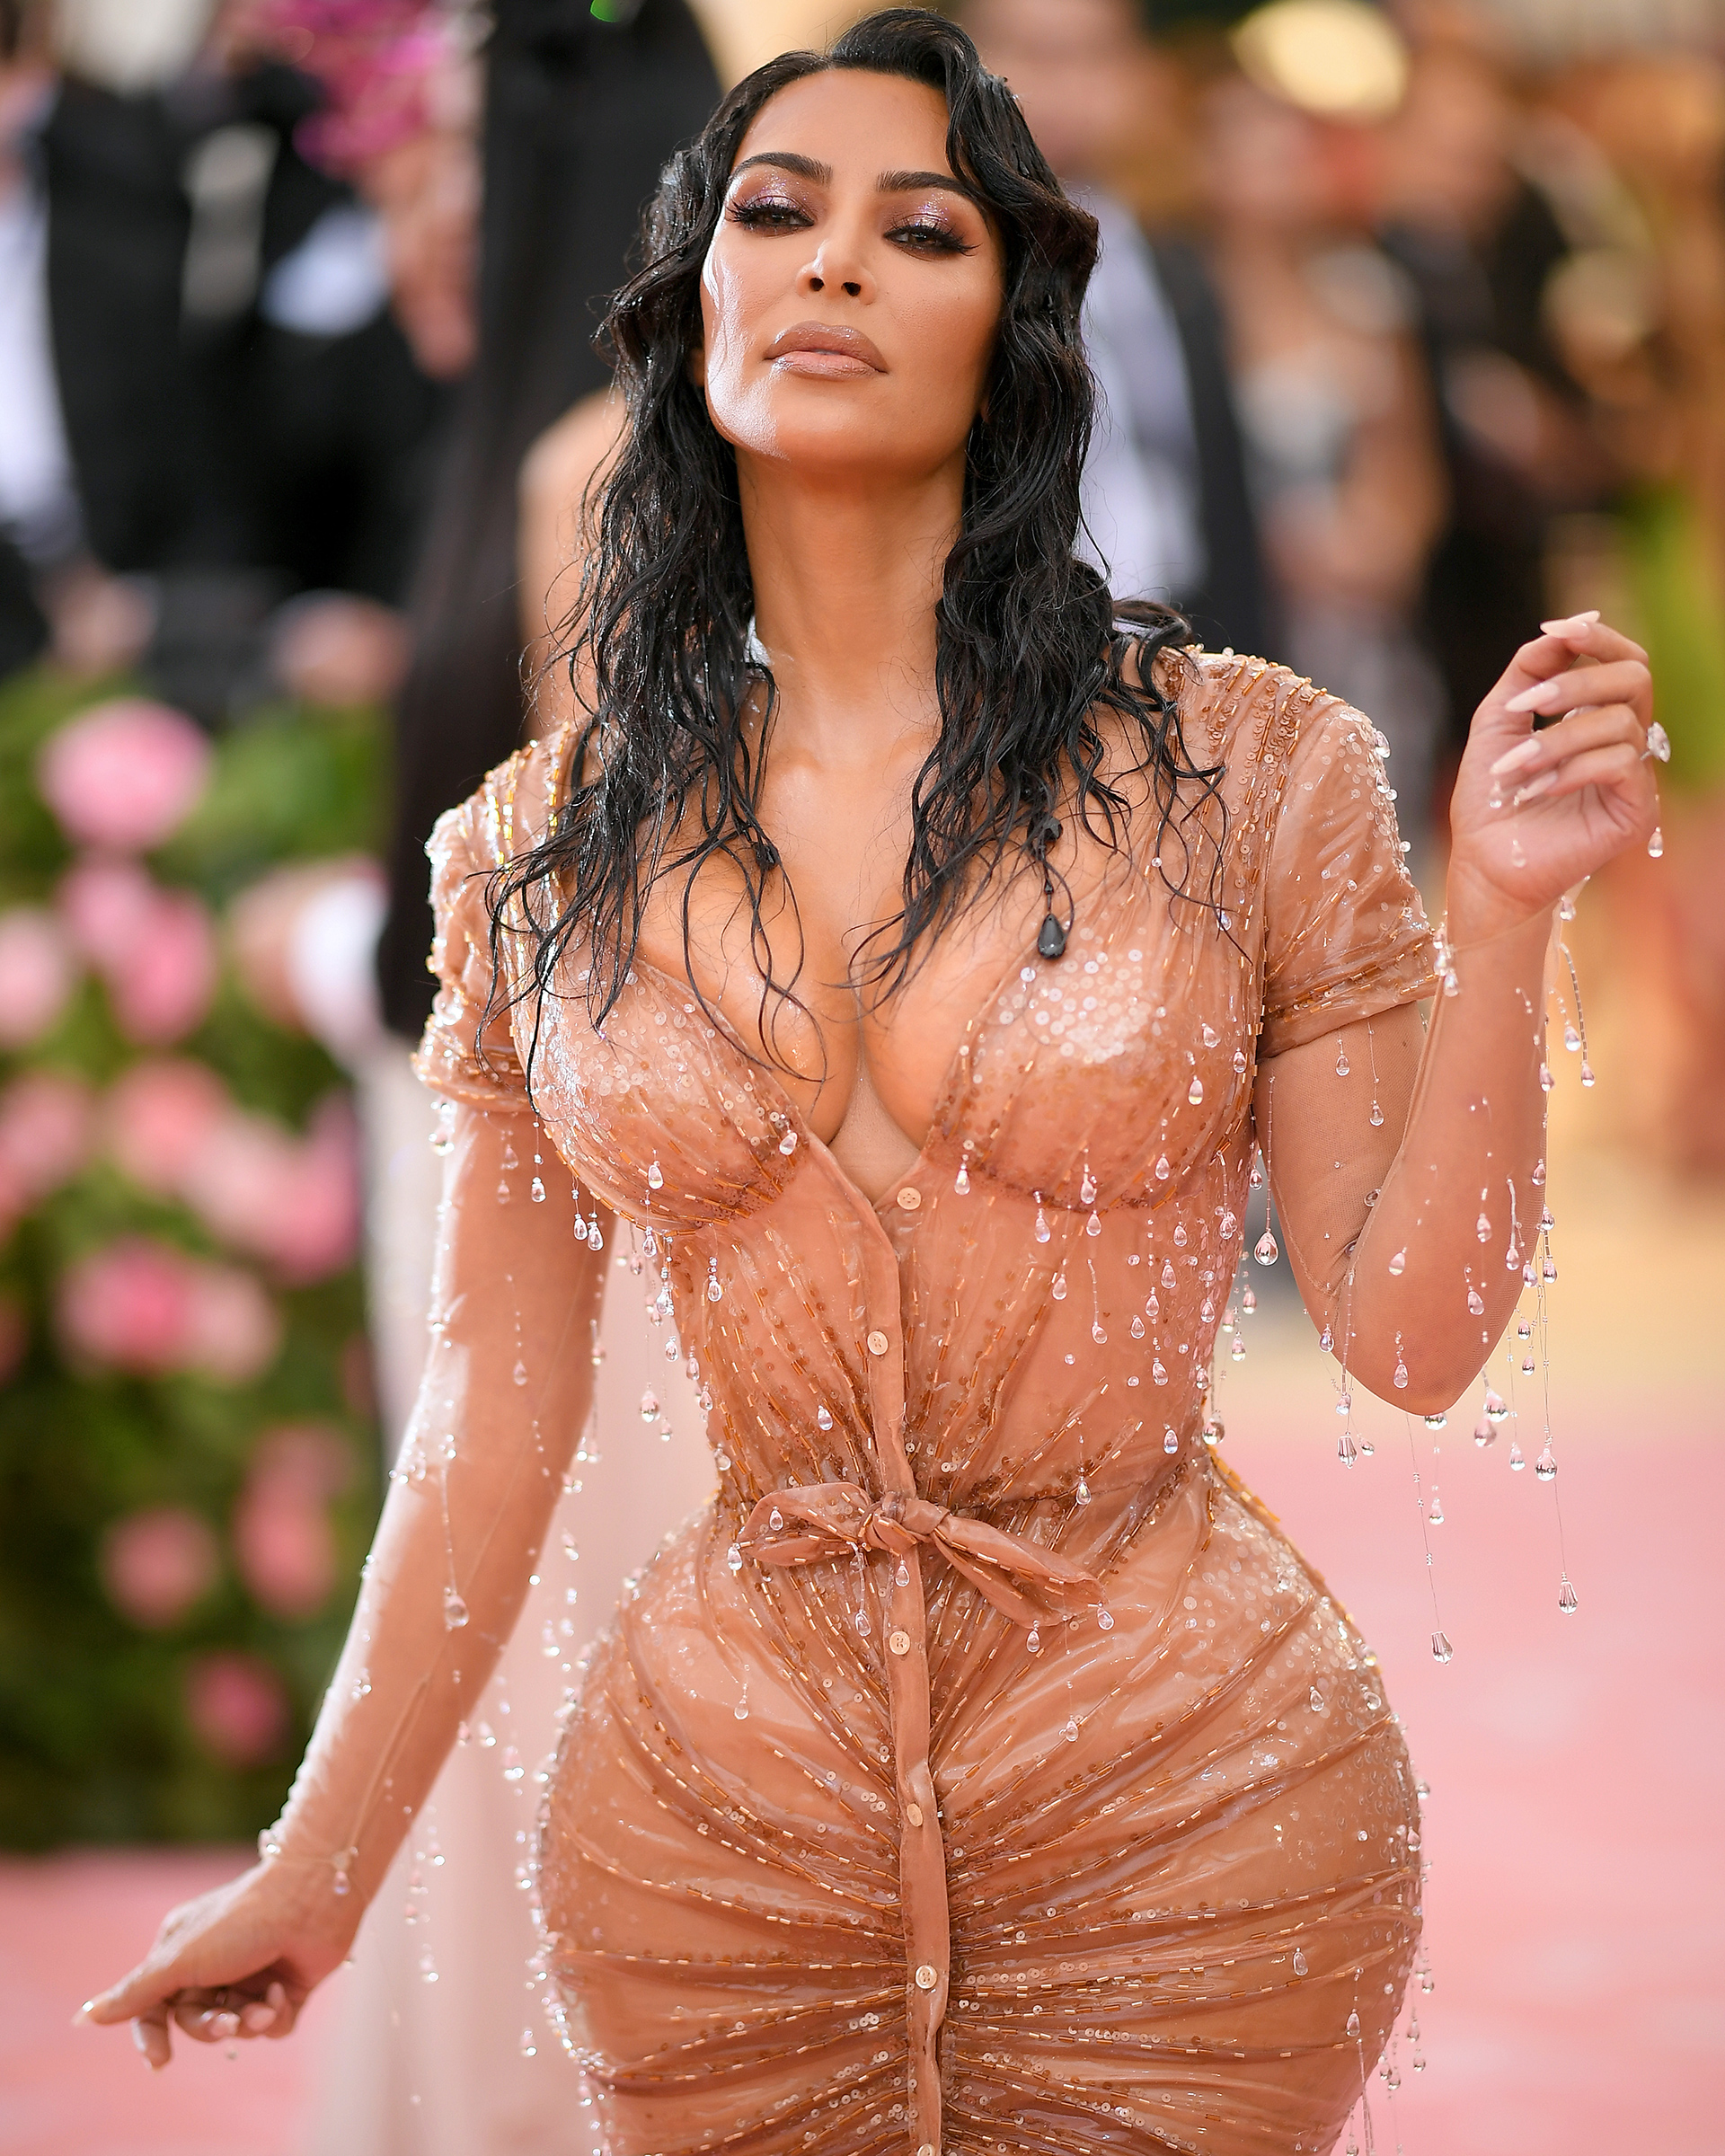 Kim Kardashian West, wearing a custom latex Thierry Mugler dress, attends the 2019 Met Gala